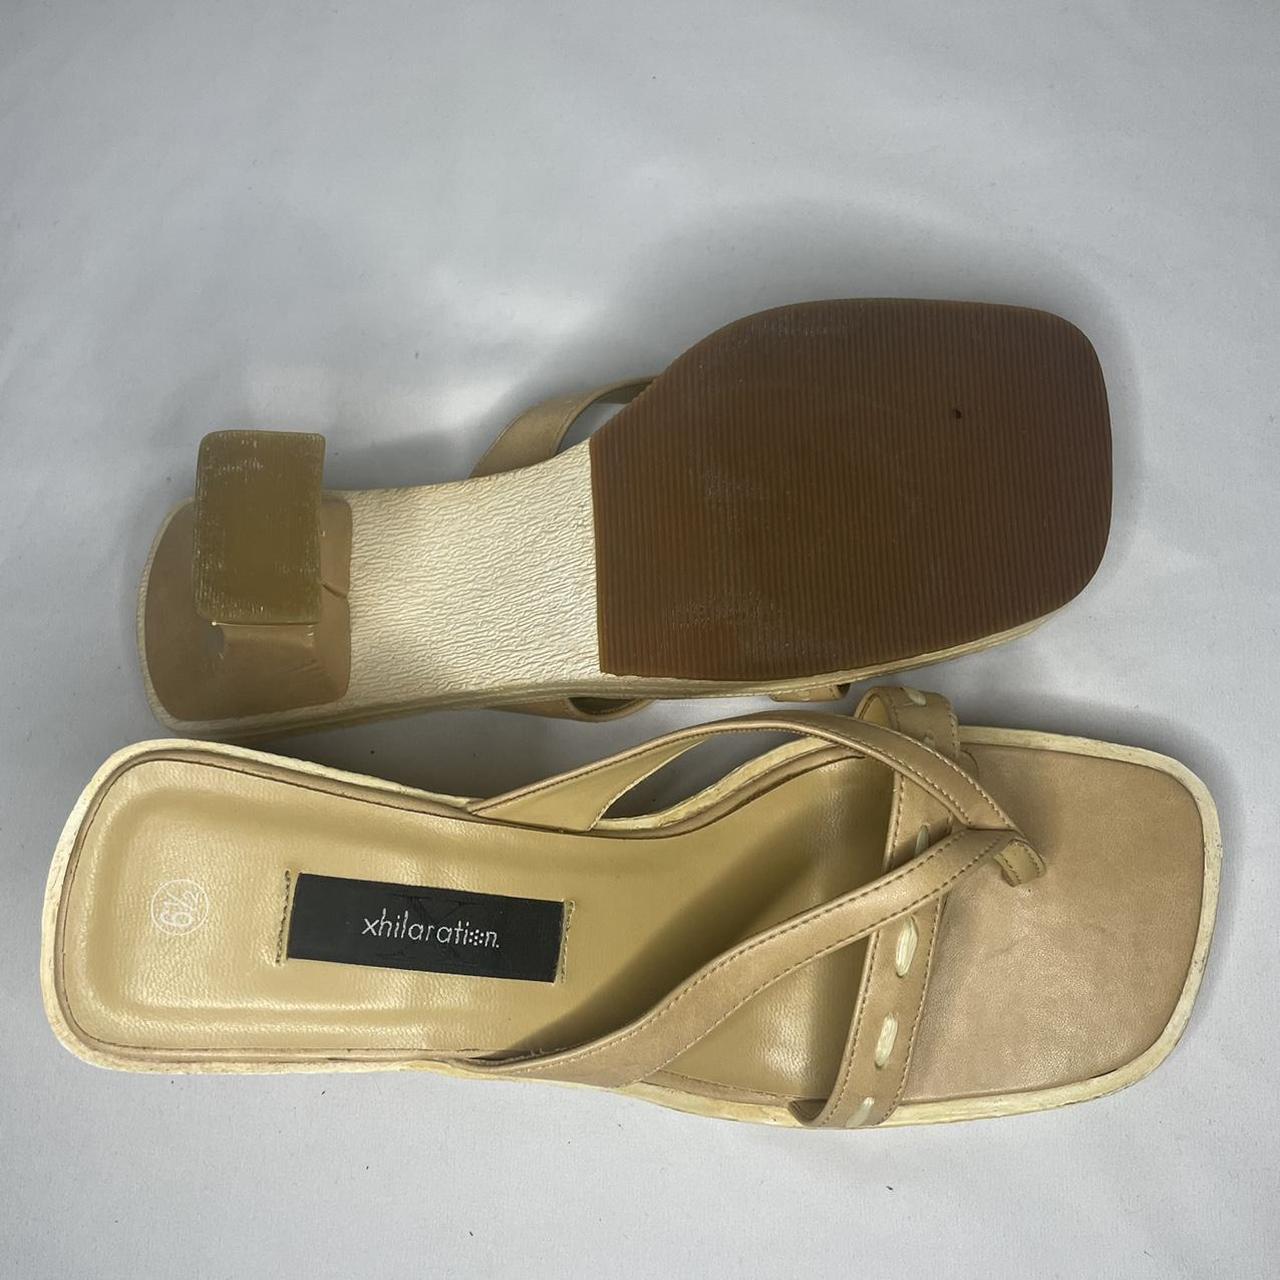 Block heel sandals, 2000s style, size 6.5, square... - Depop